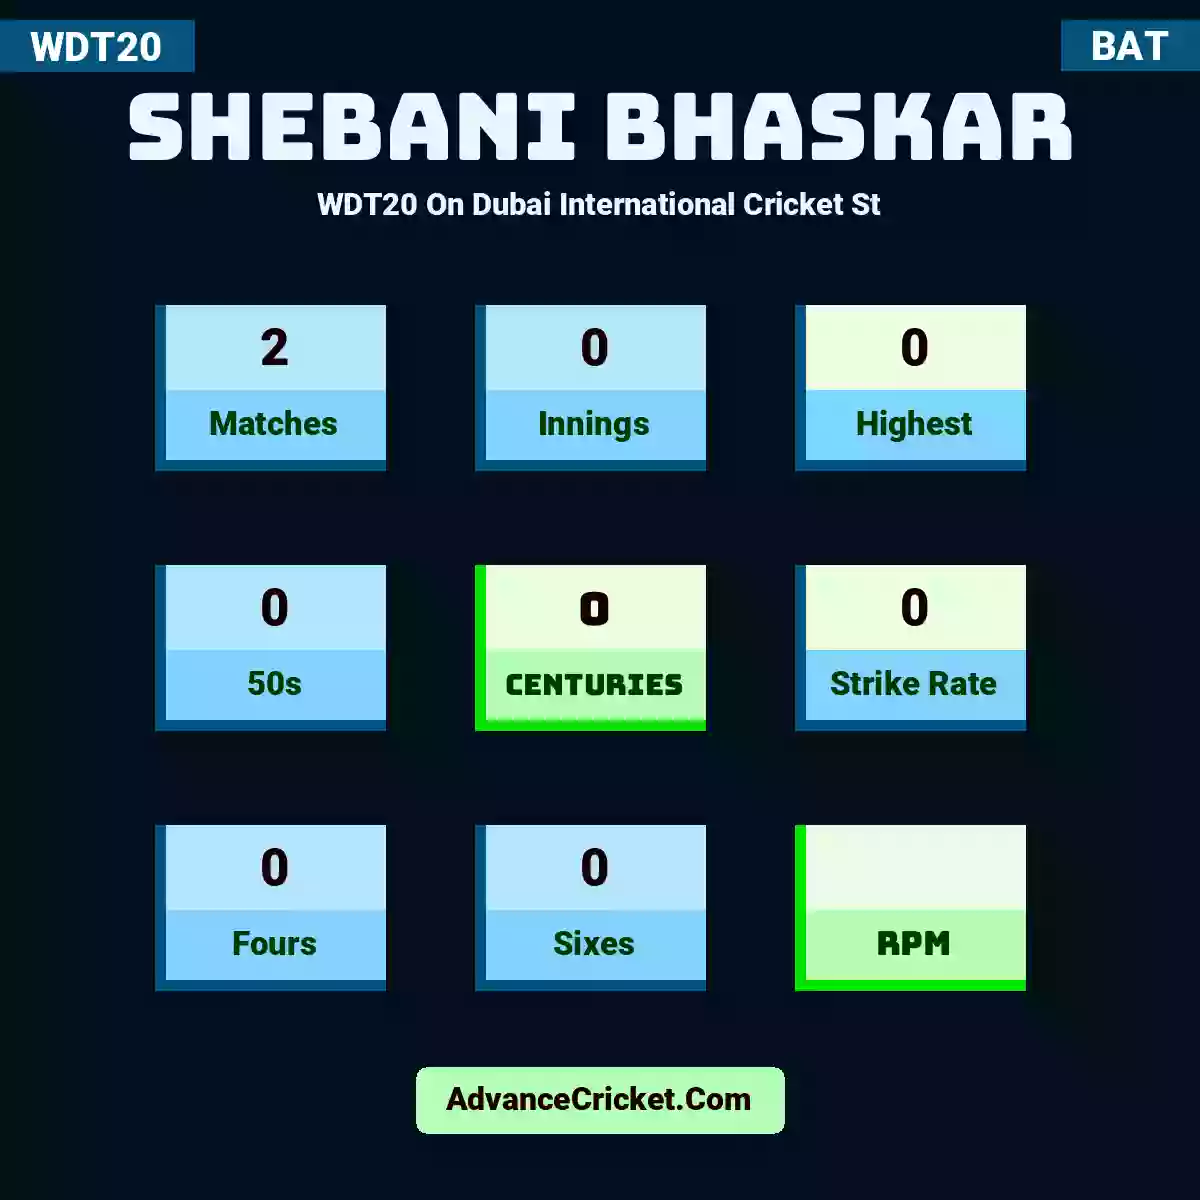 Shebani Bhaskar WDT20  On Dubai International Cricket St, Shebani Bhaskar played 2 matches, scored 0 runs as highest, 0 half-centuries, and 0 centuries, with a strike rate of 0. S.Bhaskar hit 0 fours and 0 sixes.